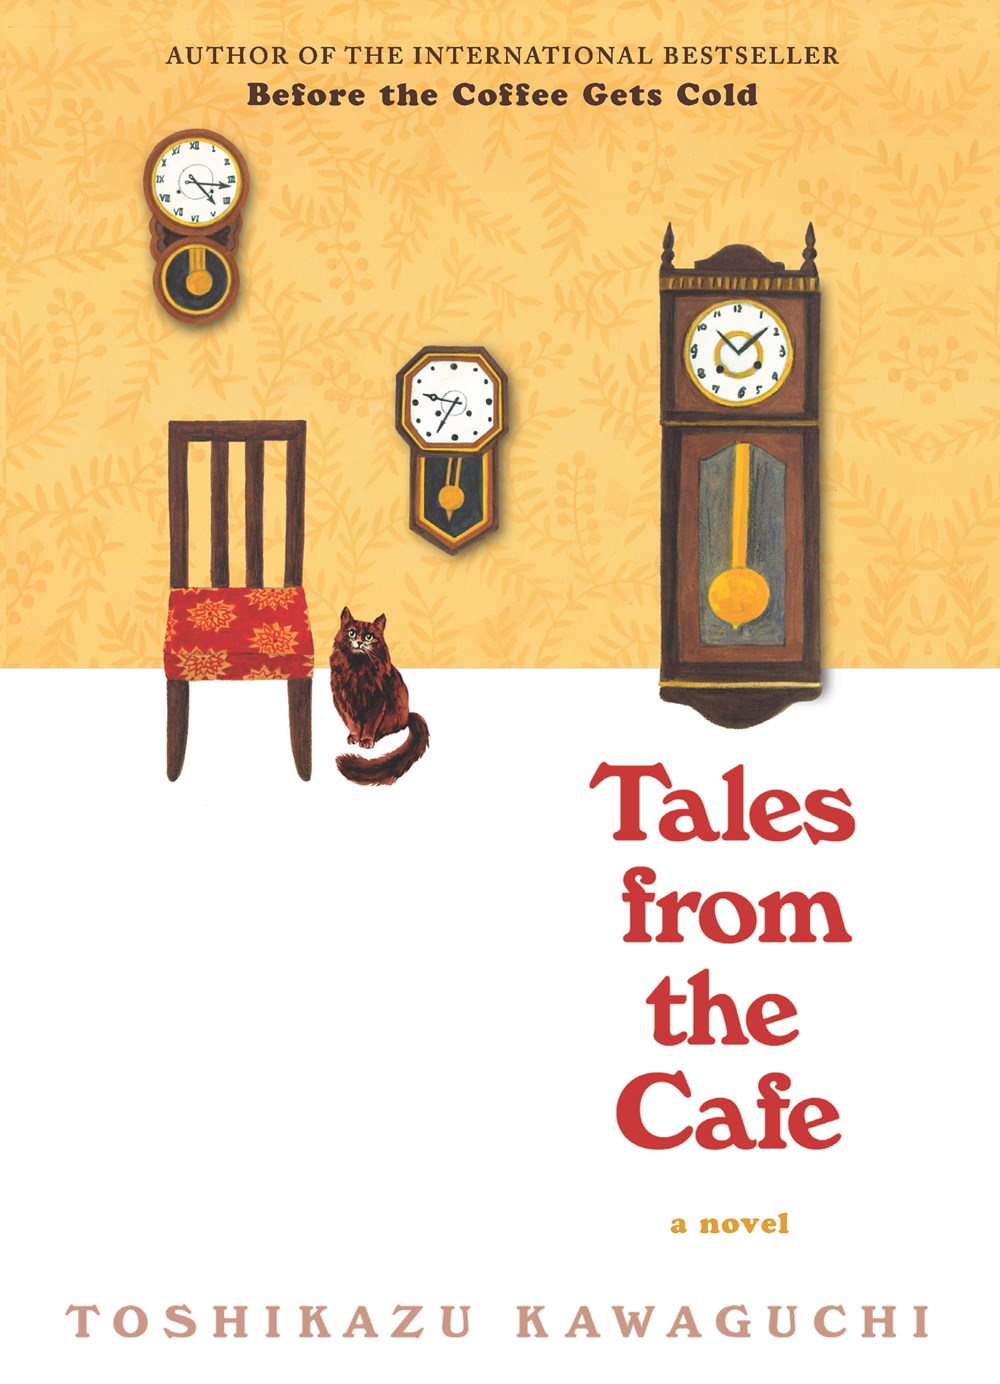 Tales From The Cafe by Toshikazu Kawaguchi